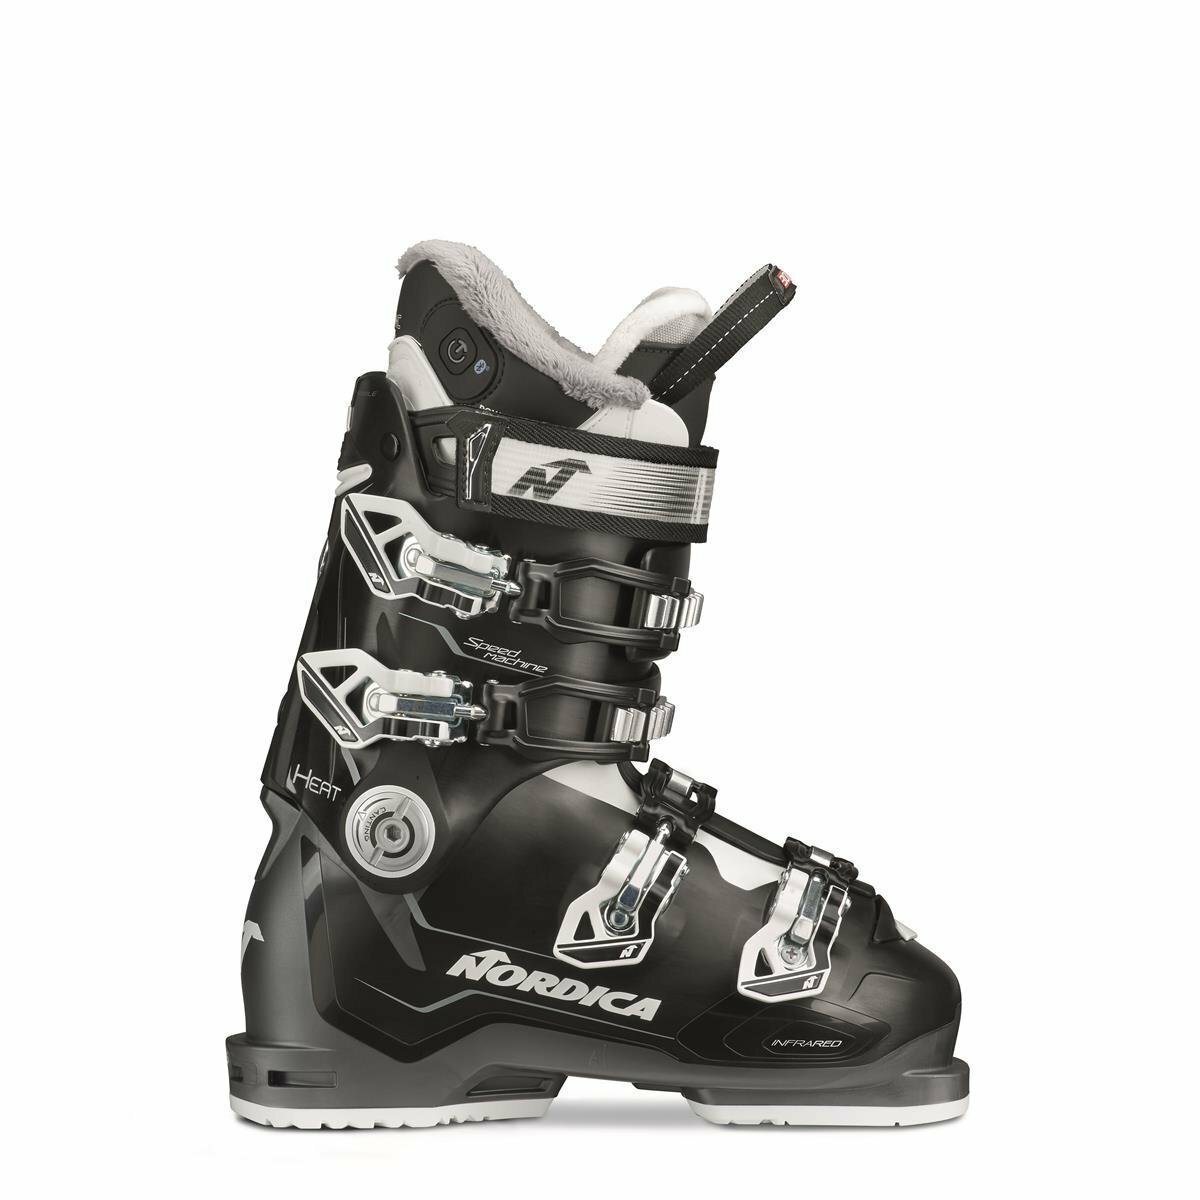 Lyžařské boty Nordica SPEEDMACHINE HEAT 85 W - 235, black/anthracite/white